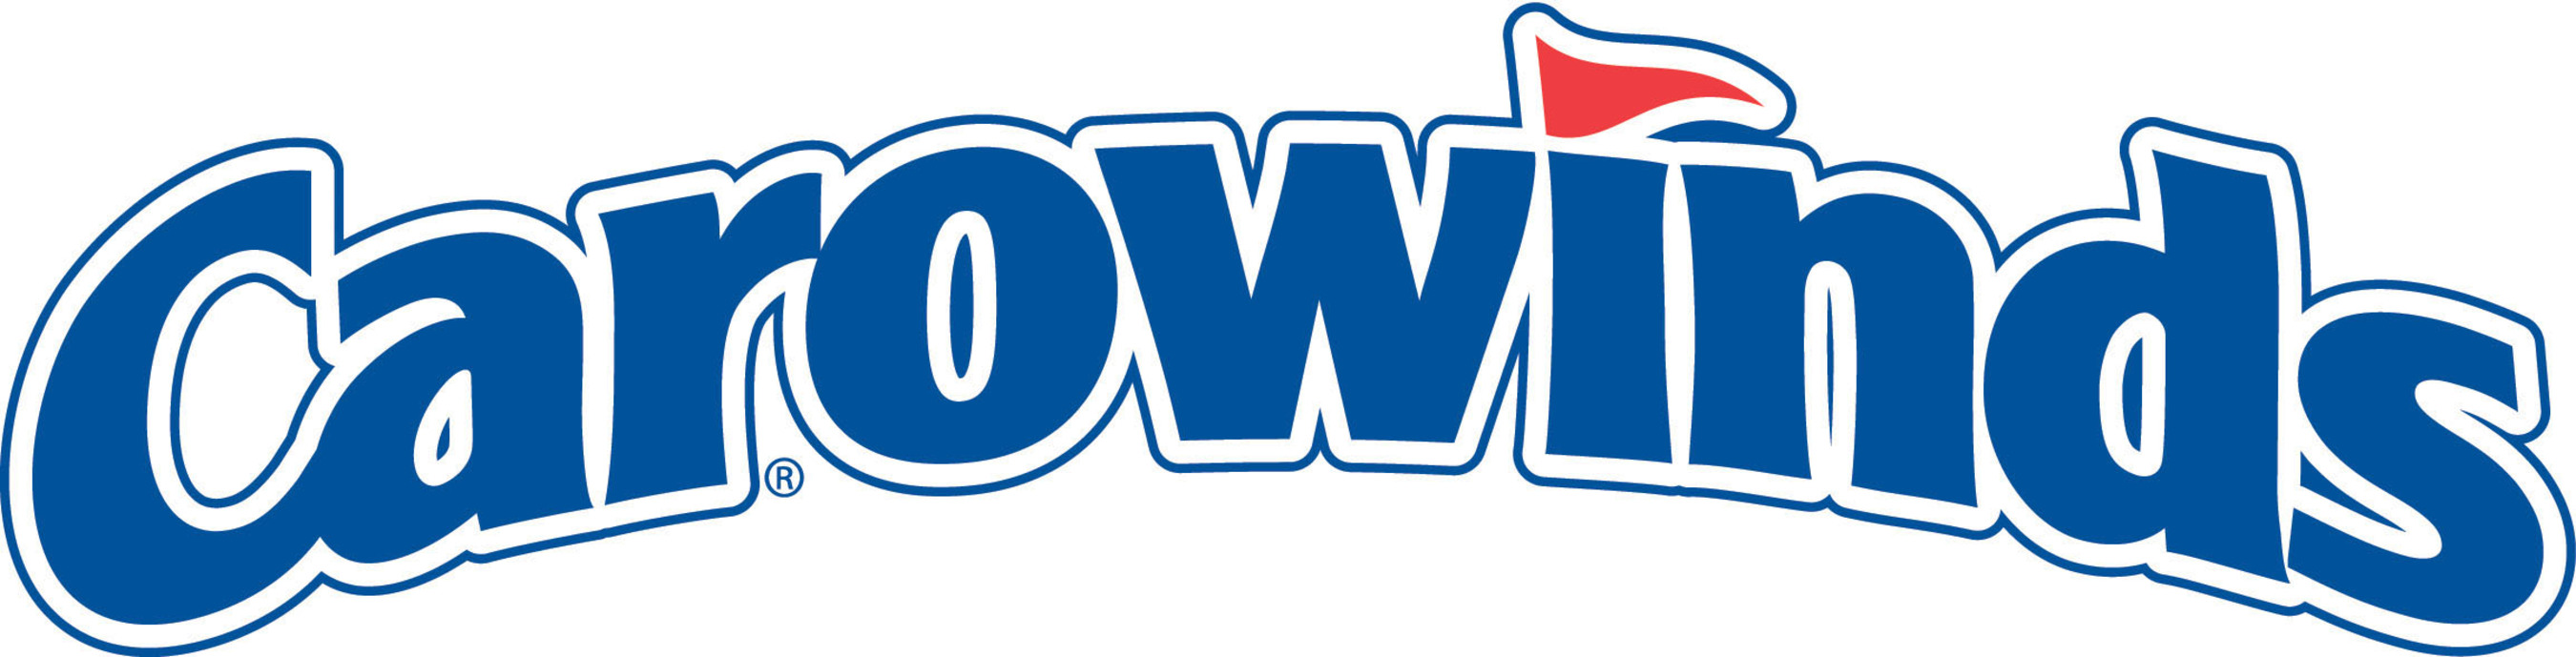 Carowinds Logo.